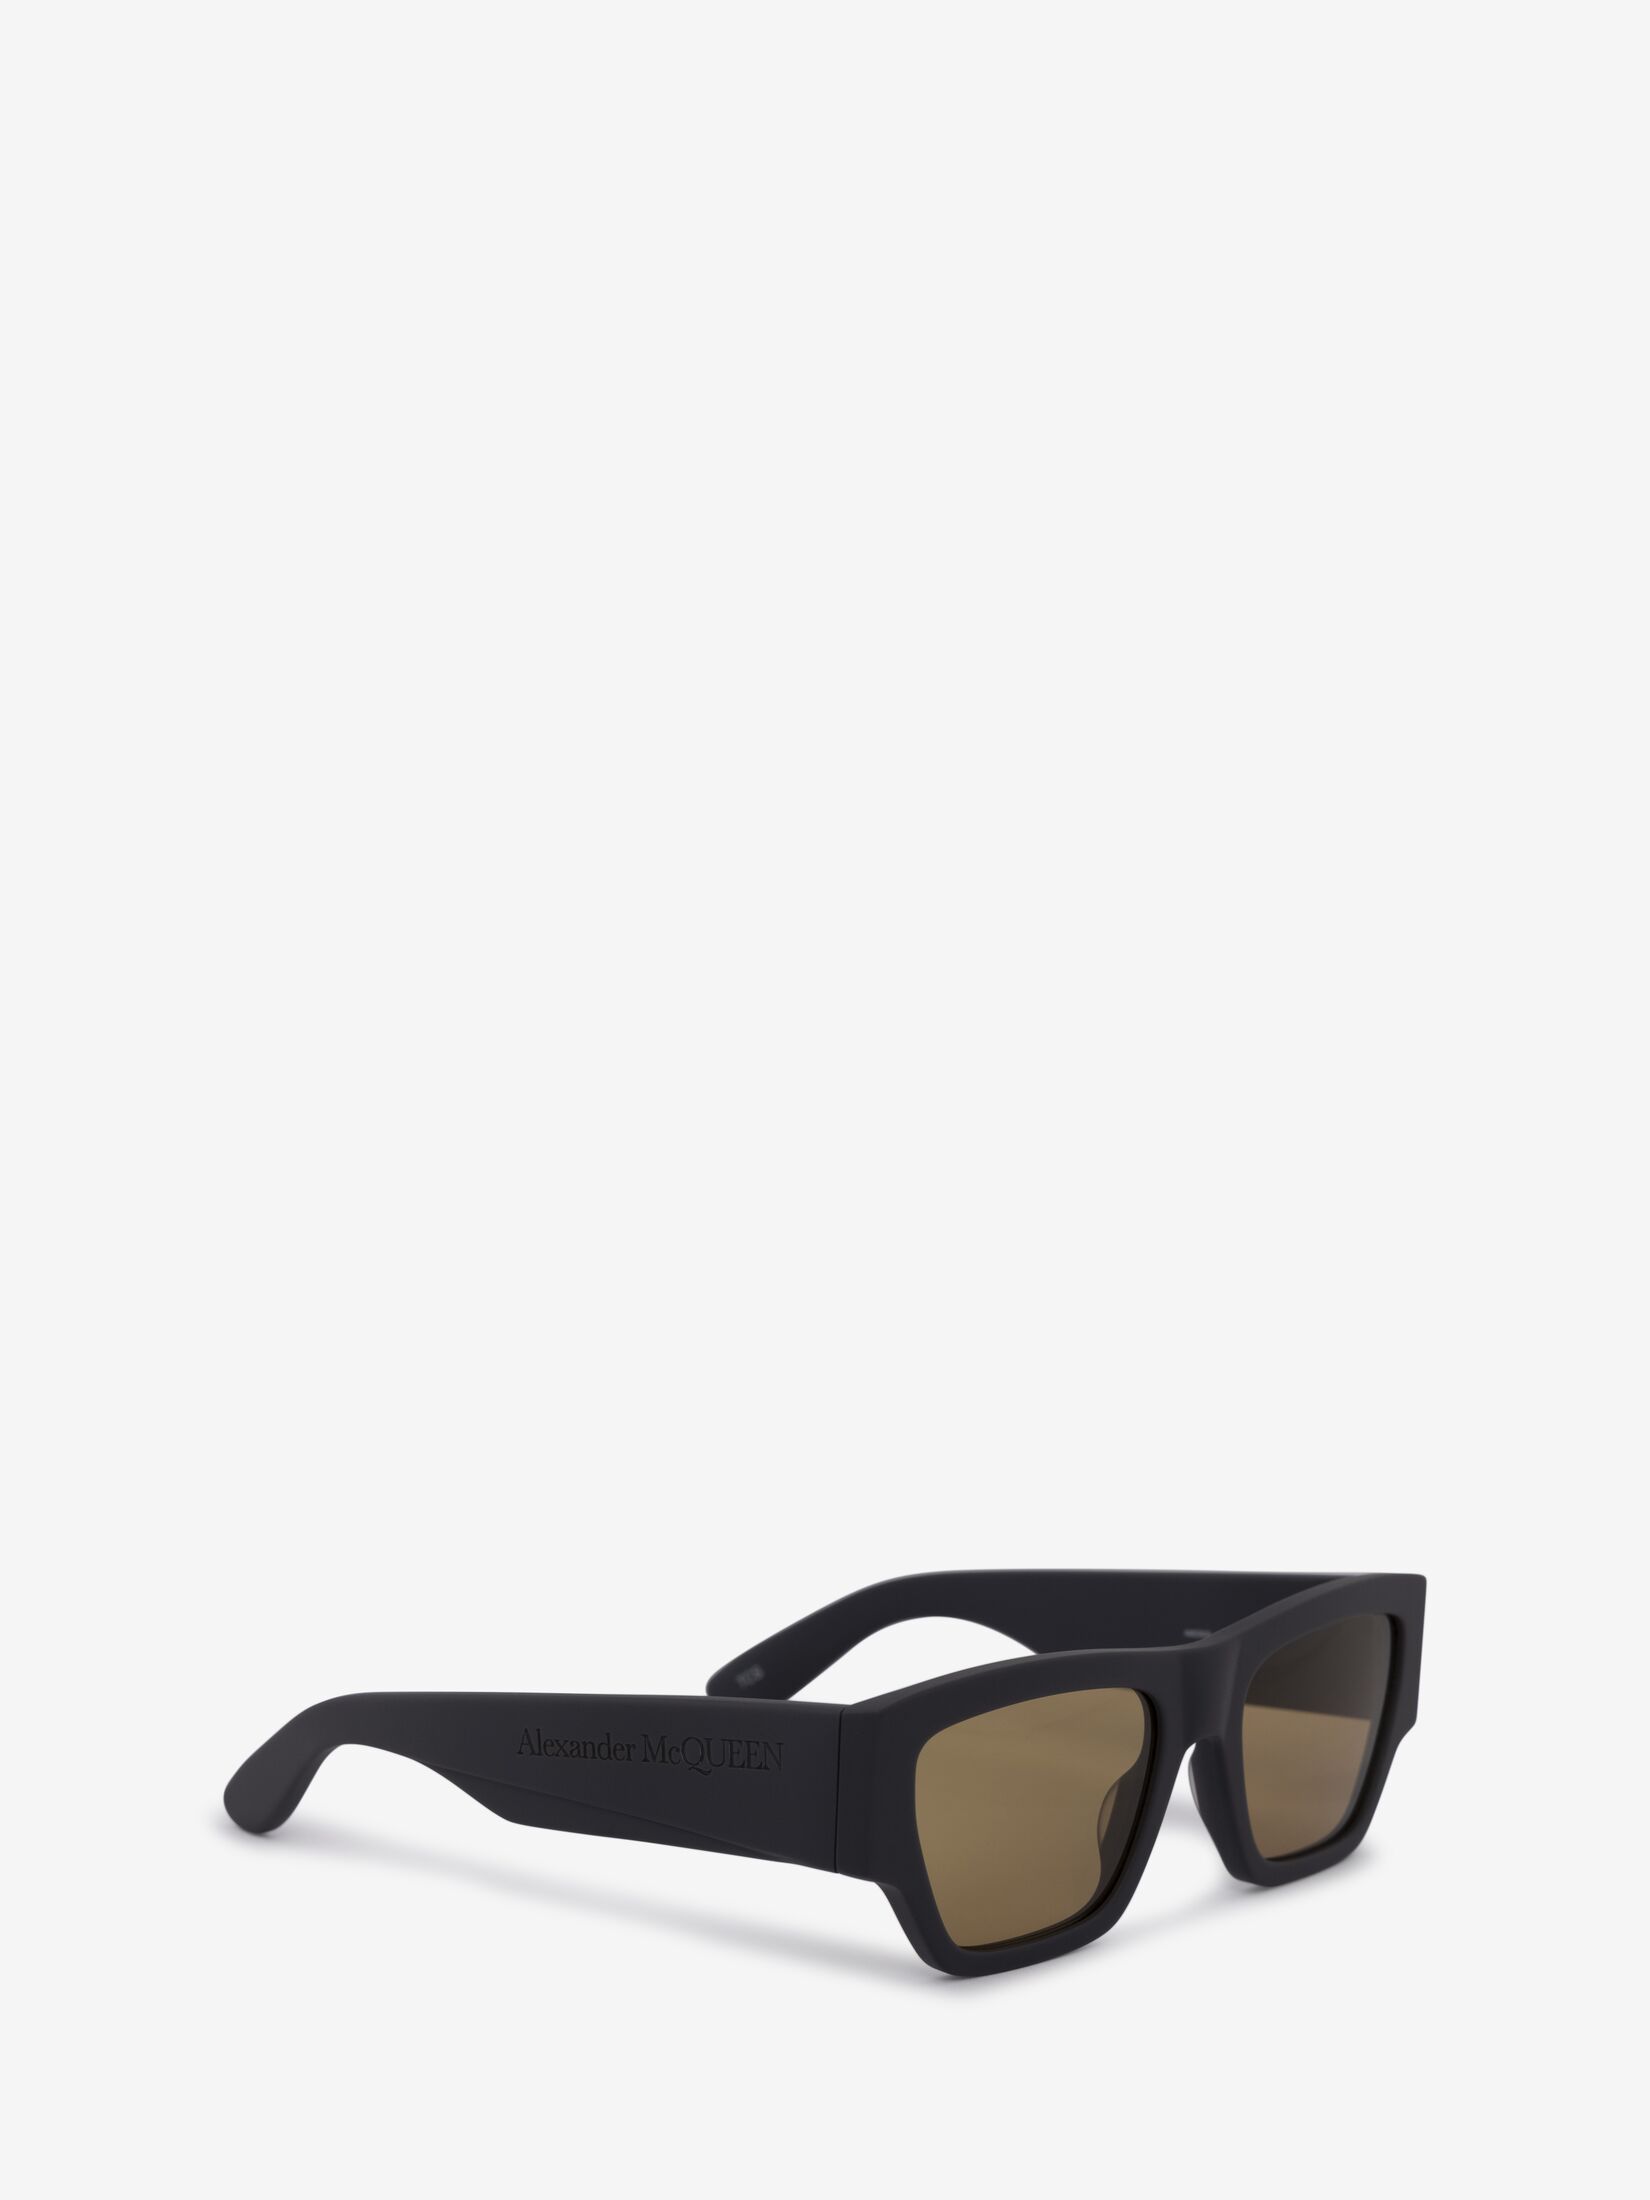 McQueen 앵글 직사각형 선글라스